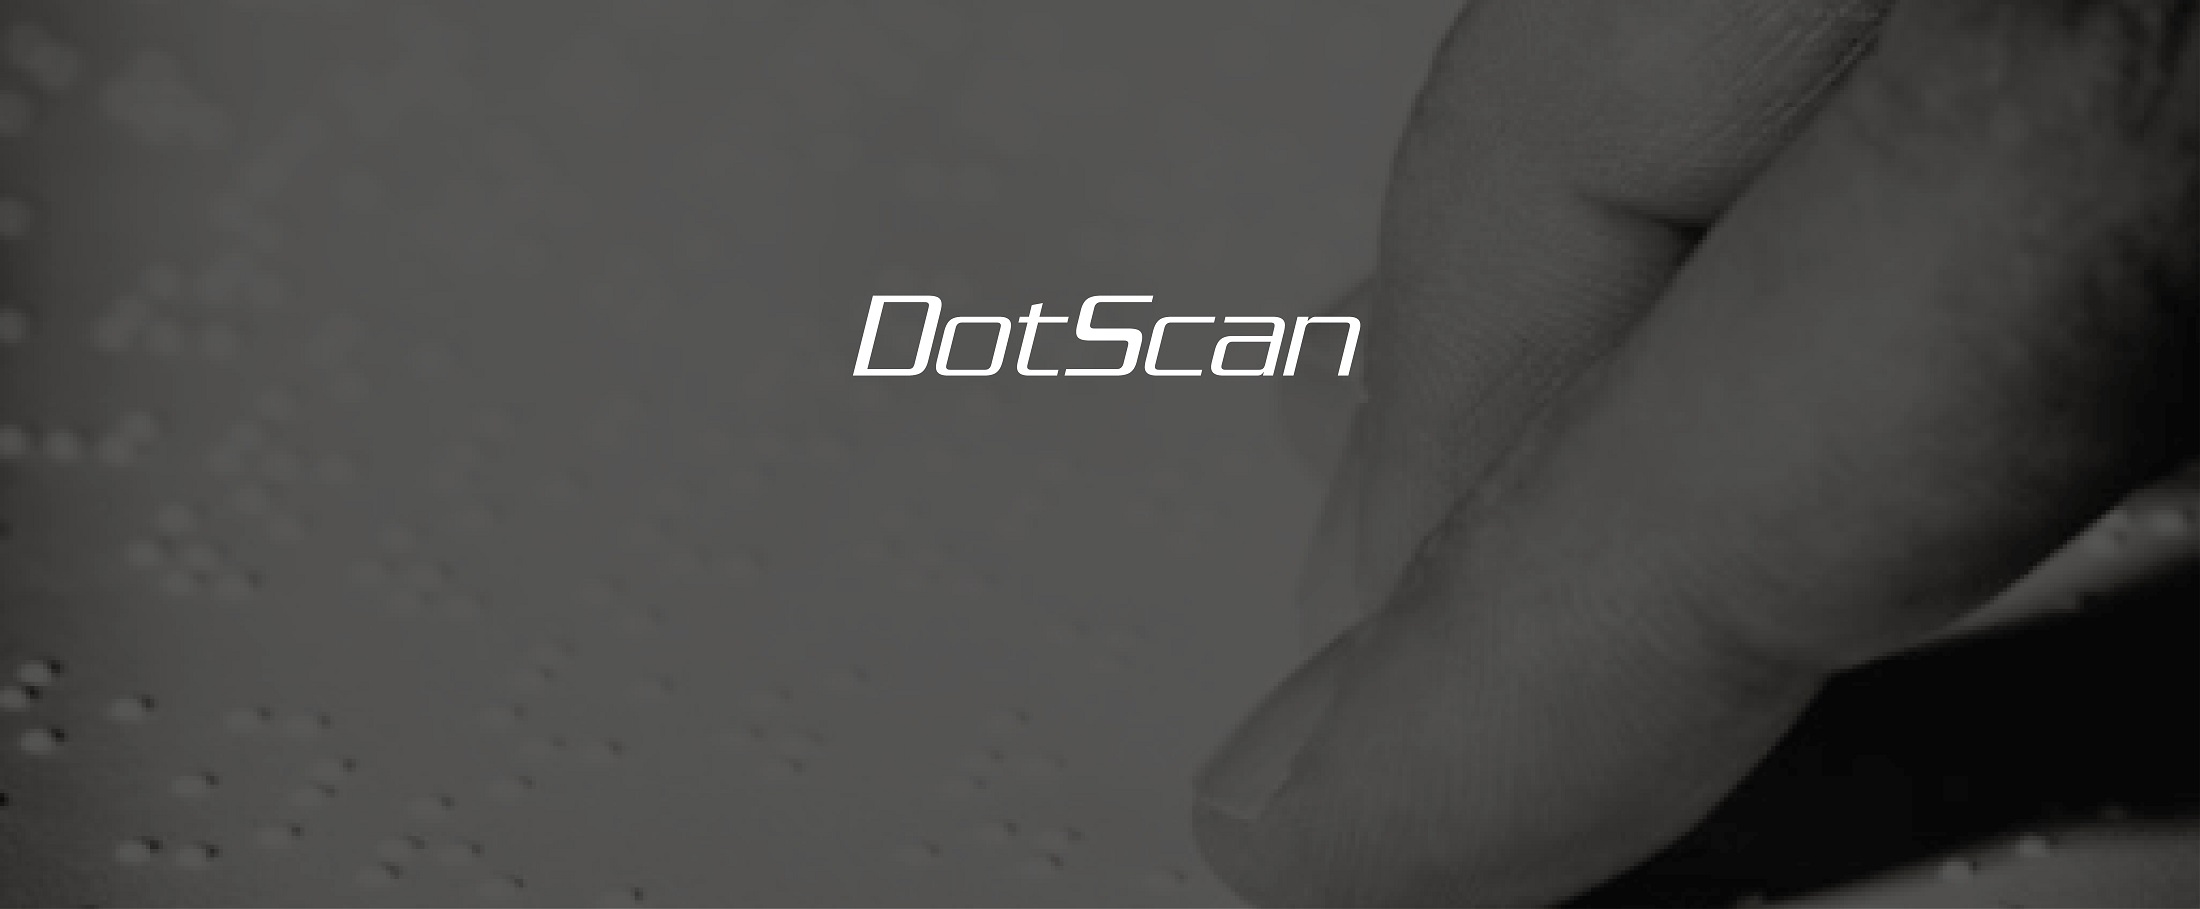 DotScan - website main image for header